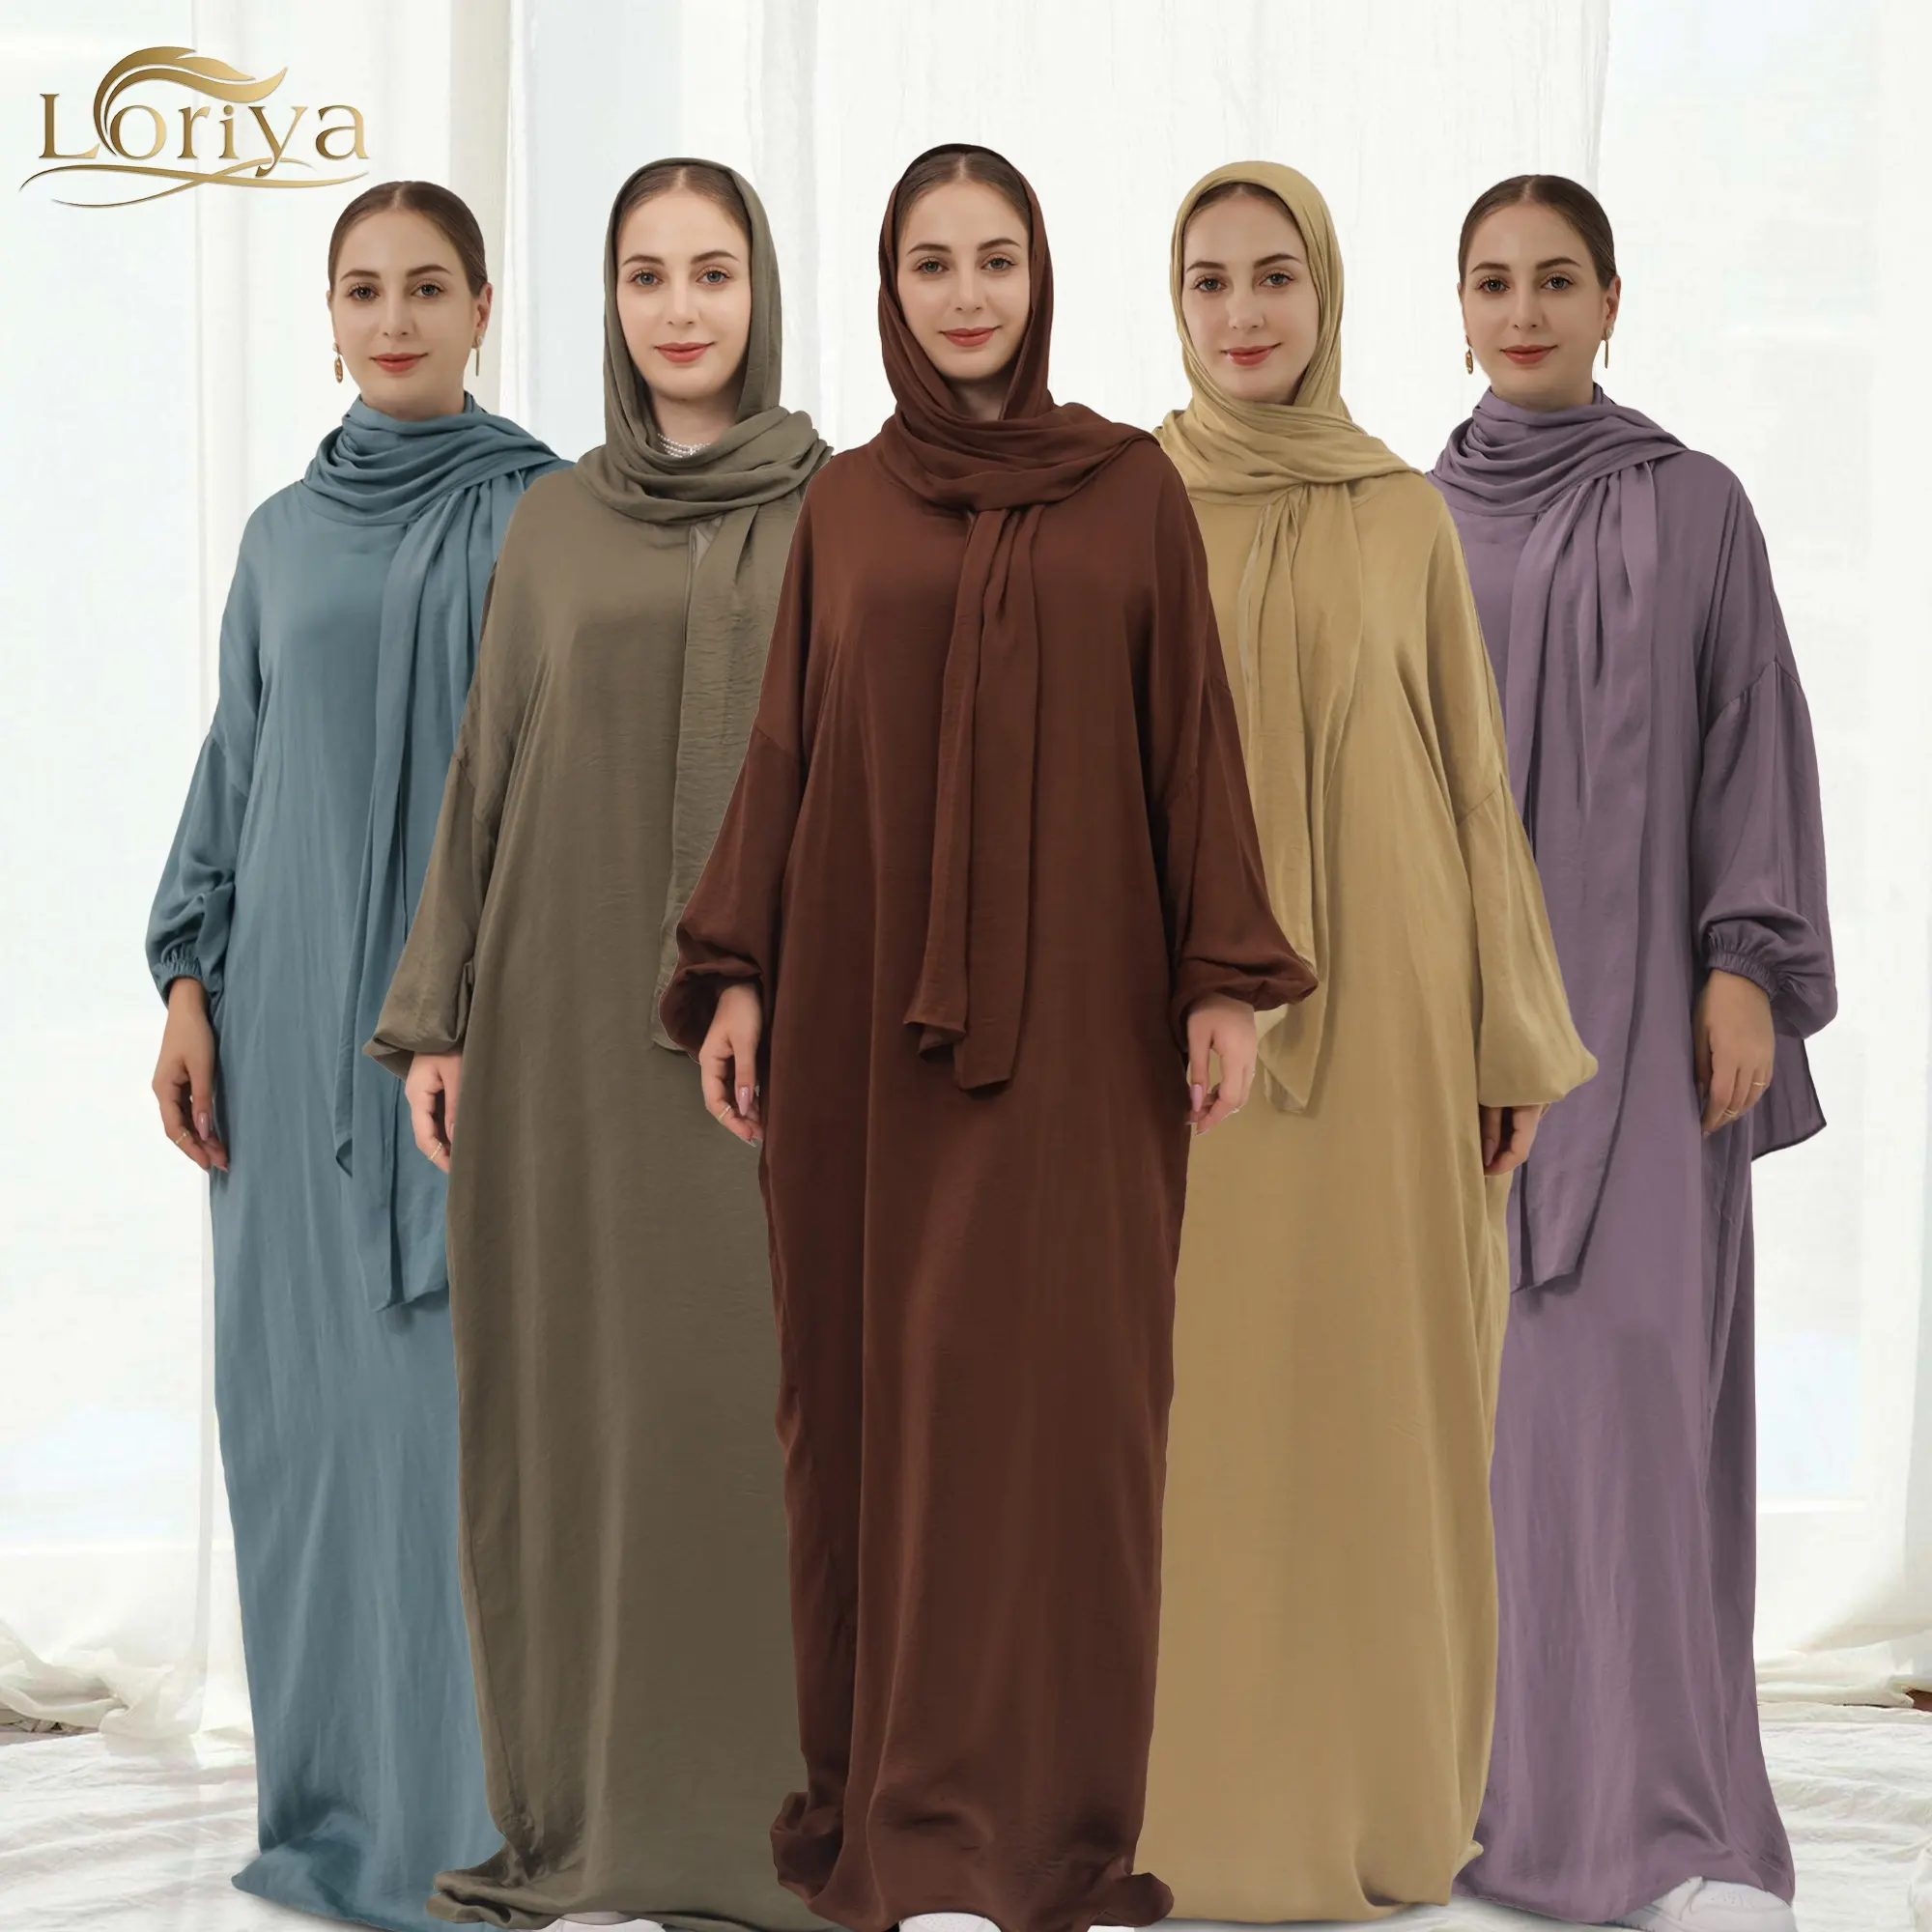 Loriya Nova Chegada De Seda Abaya Muçulmano Vestido De Oração Longo com Lenço One Piece Jilbab Hijab Vestidos Hoodie Abaya